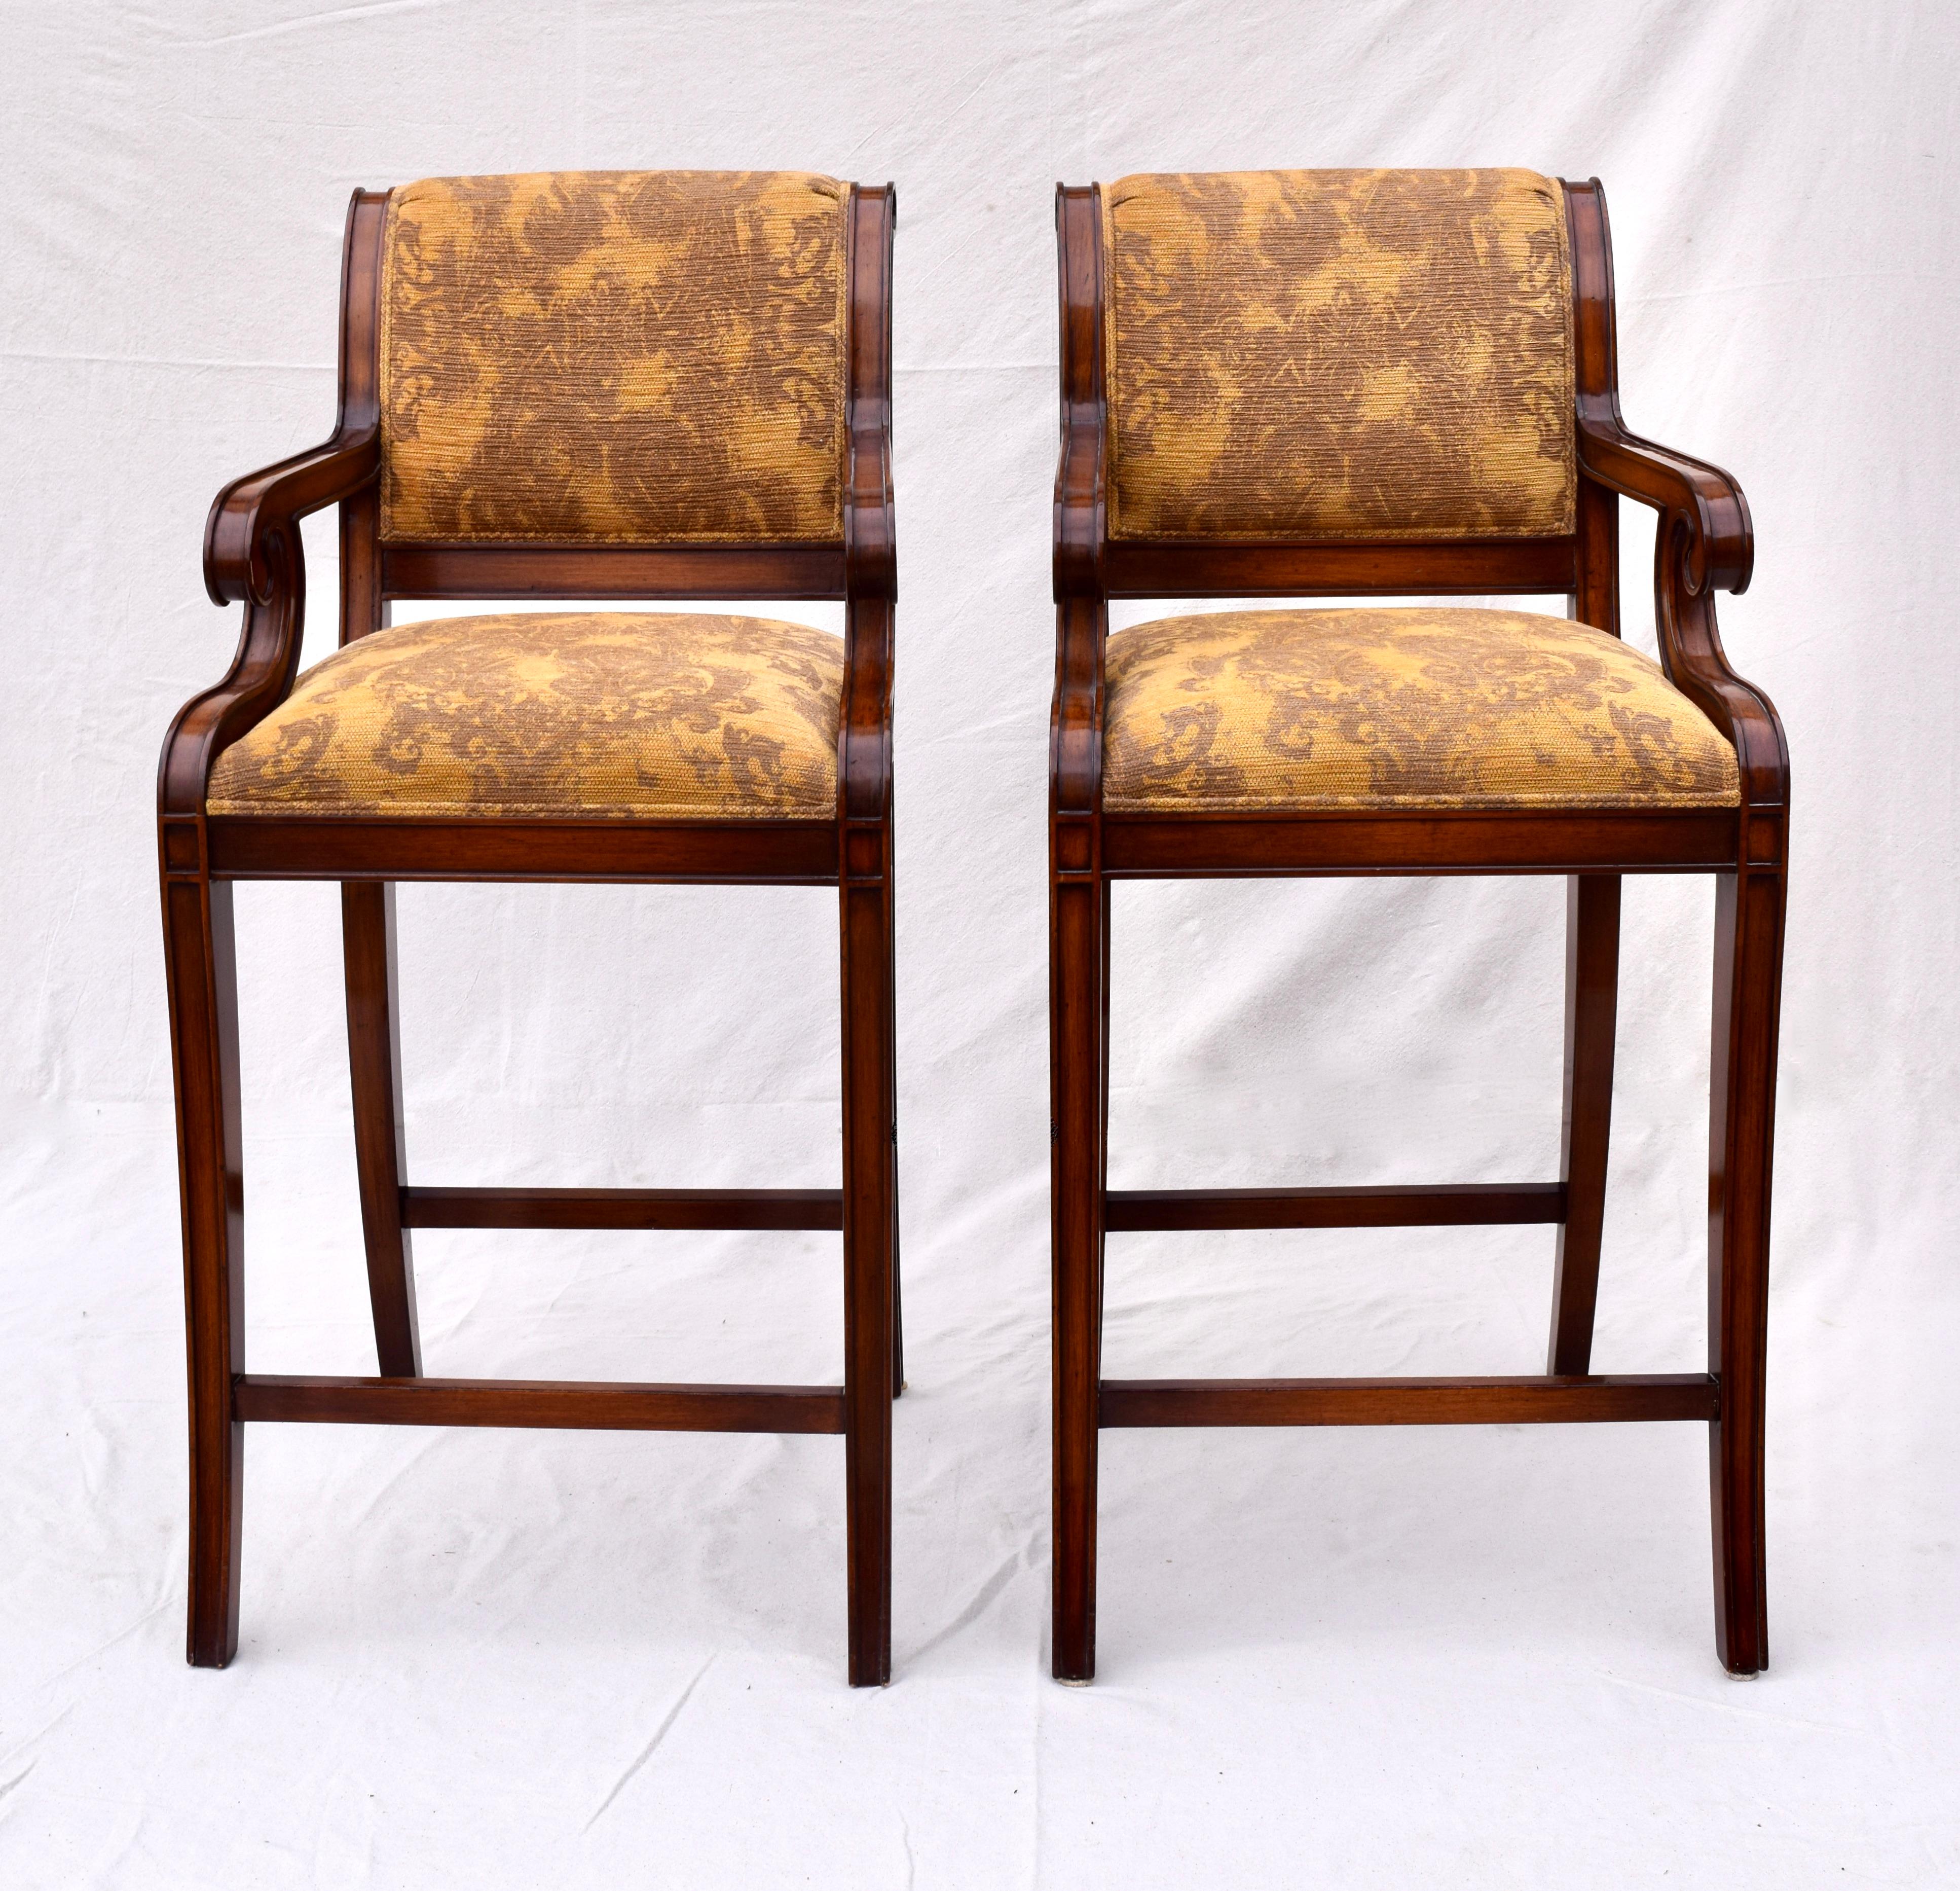 Upholstery Nancy Corzine Classic Regency Bar Stool Chairs, Pair